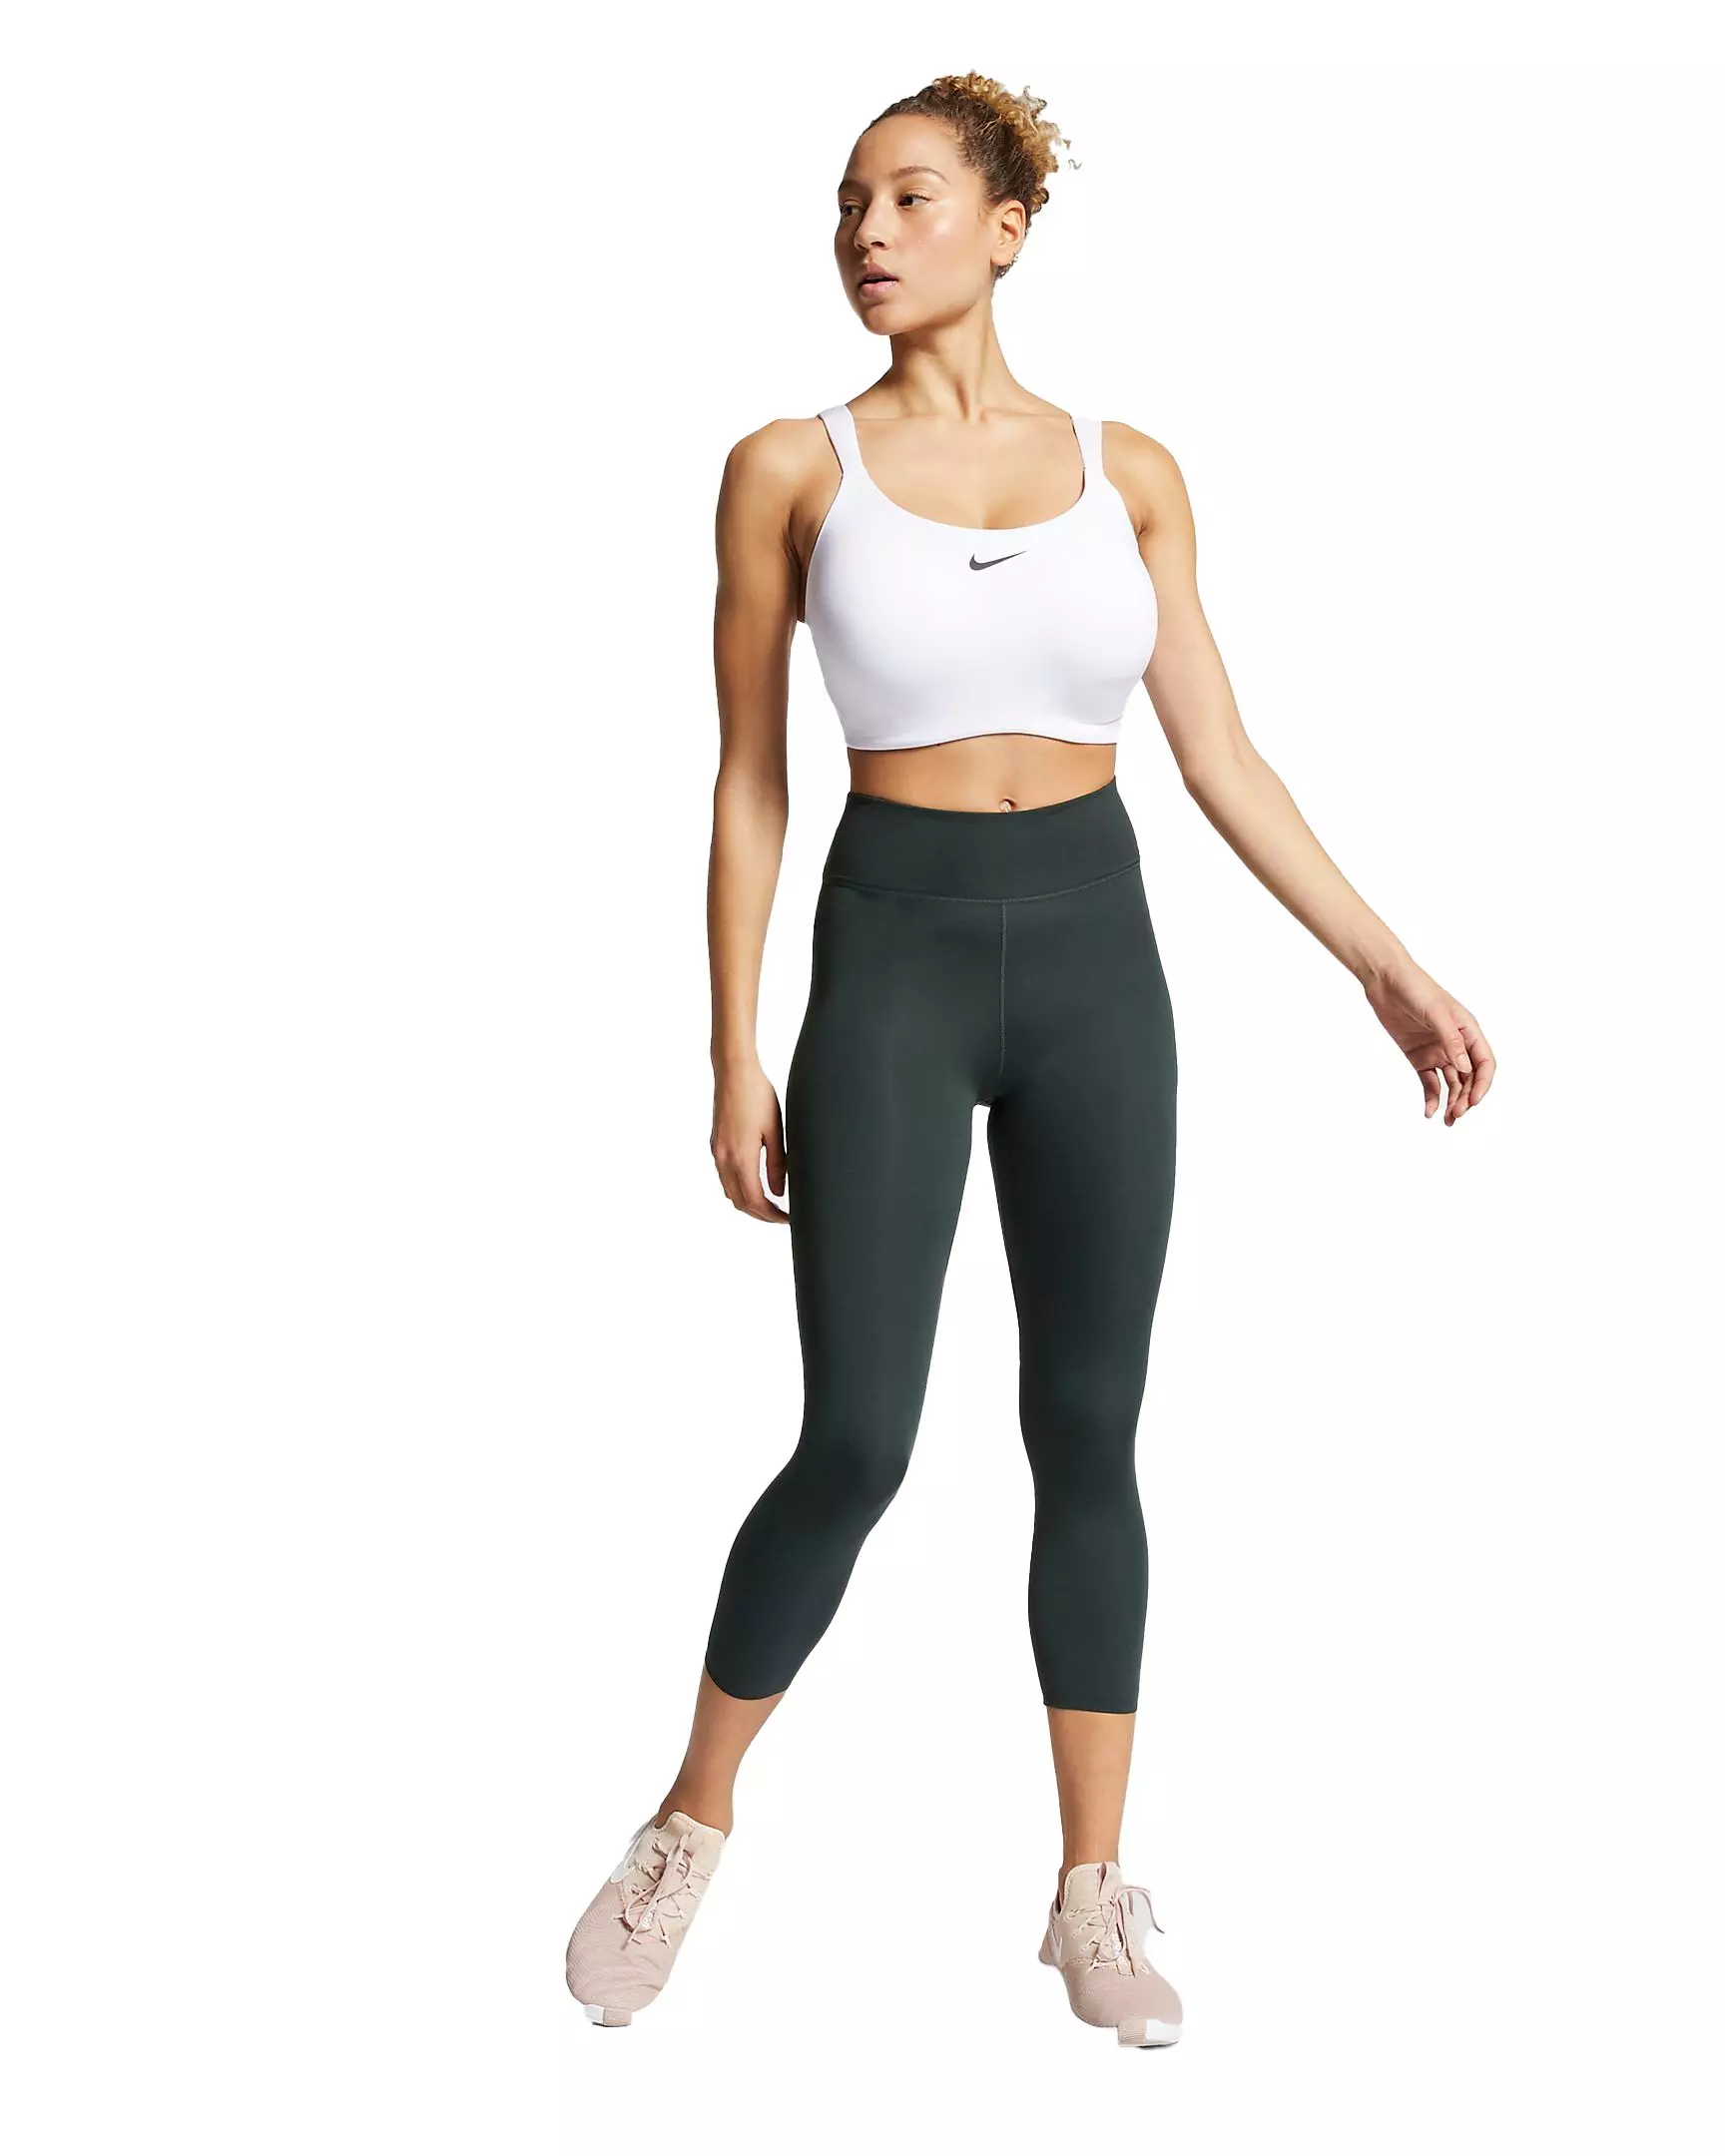 Nike Womens Sports Bra Underwire High Support Plus Size 40DD